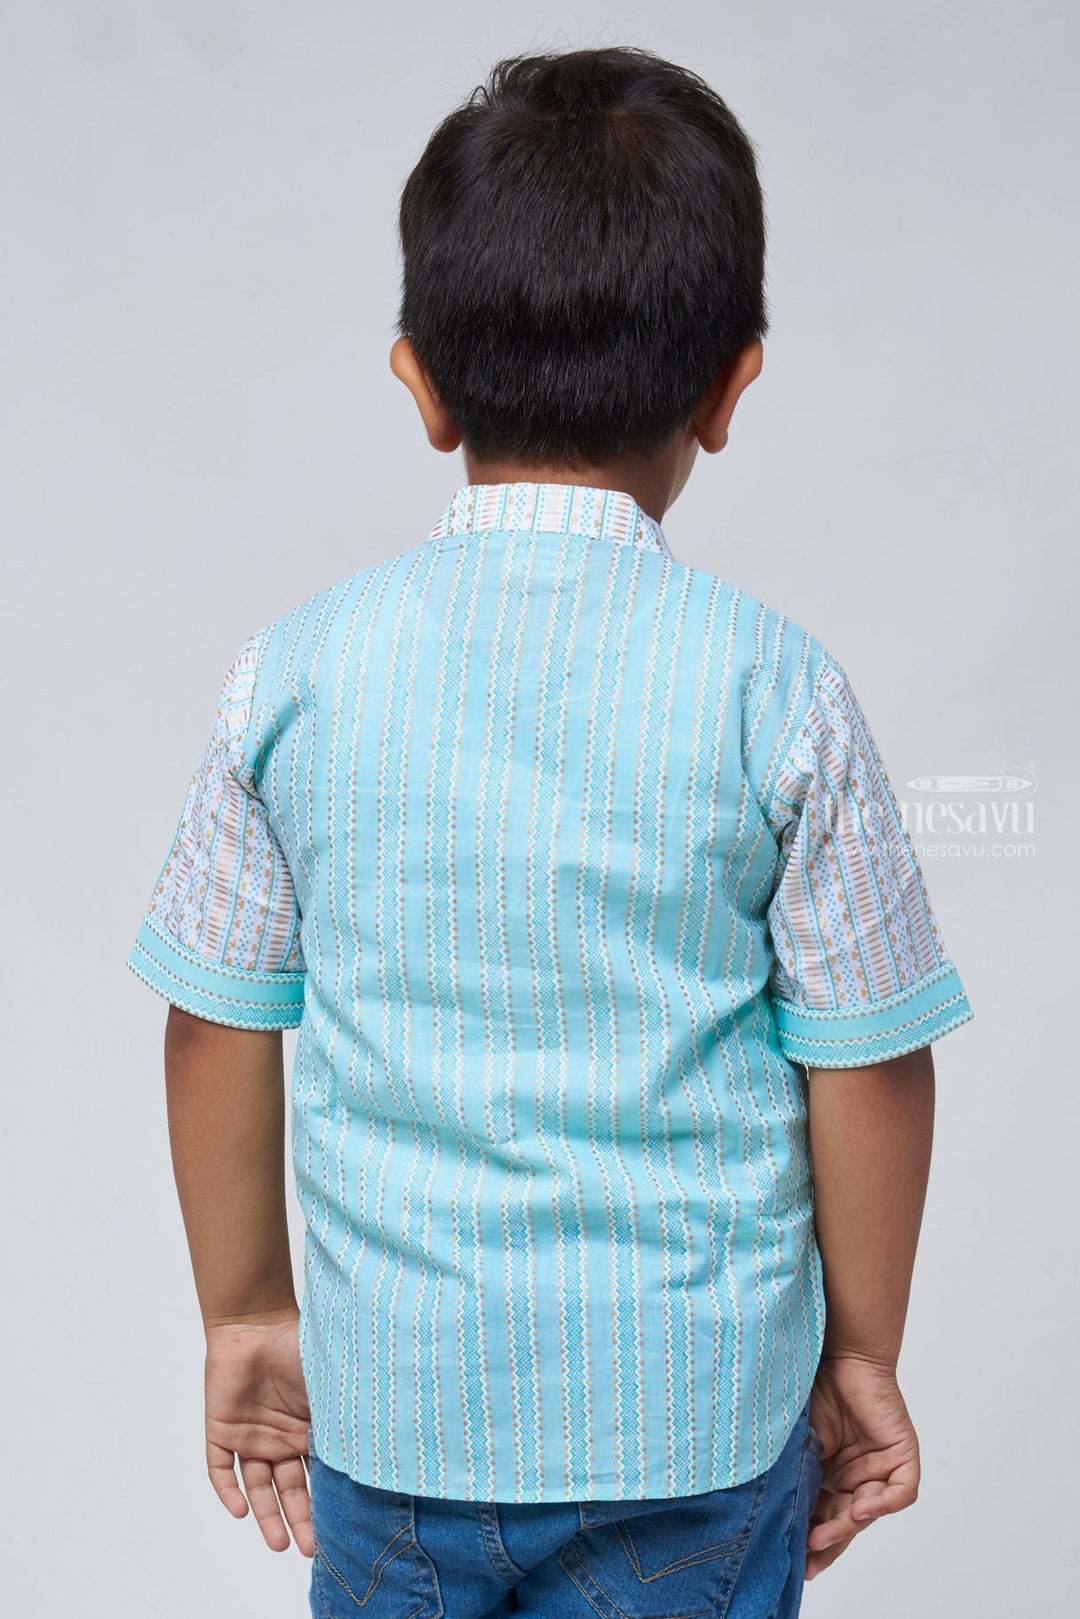 The Nesavu Boys Linen Shirt Azure Artistry: Boys Blue Shirt with Intricate Ikat Patterns, Mandarin Collar Nesavu Ikat Printed Boys Shirt | Premium Linen Shirt Online | The Nesavu